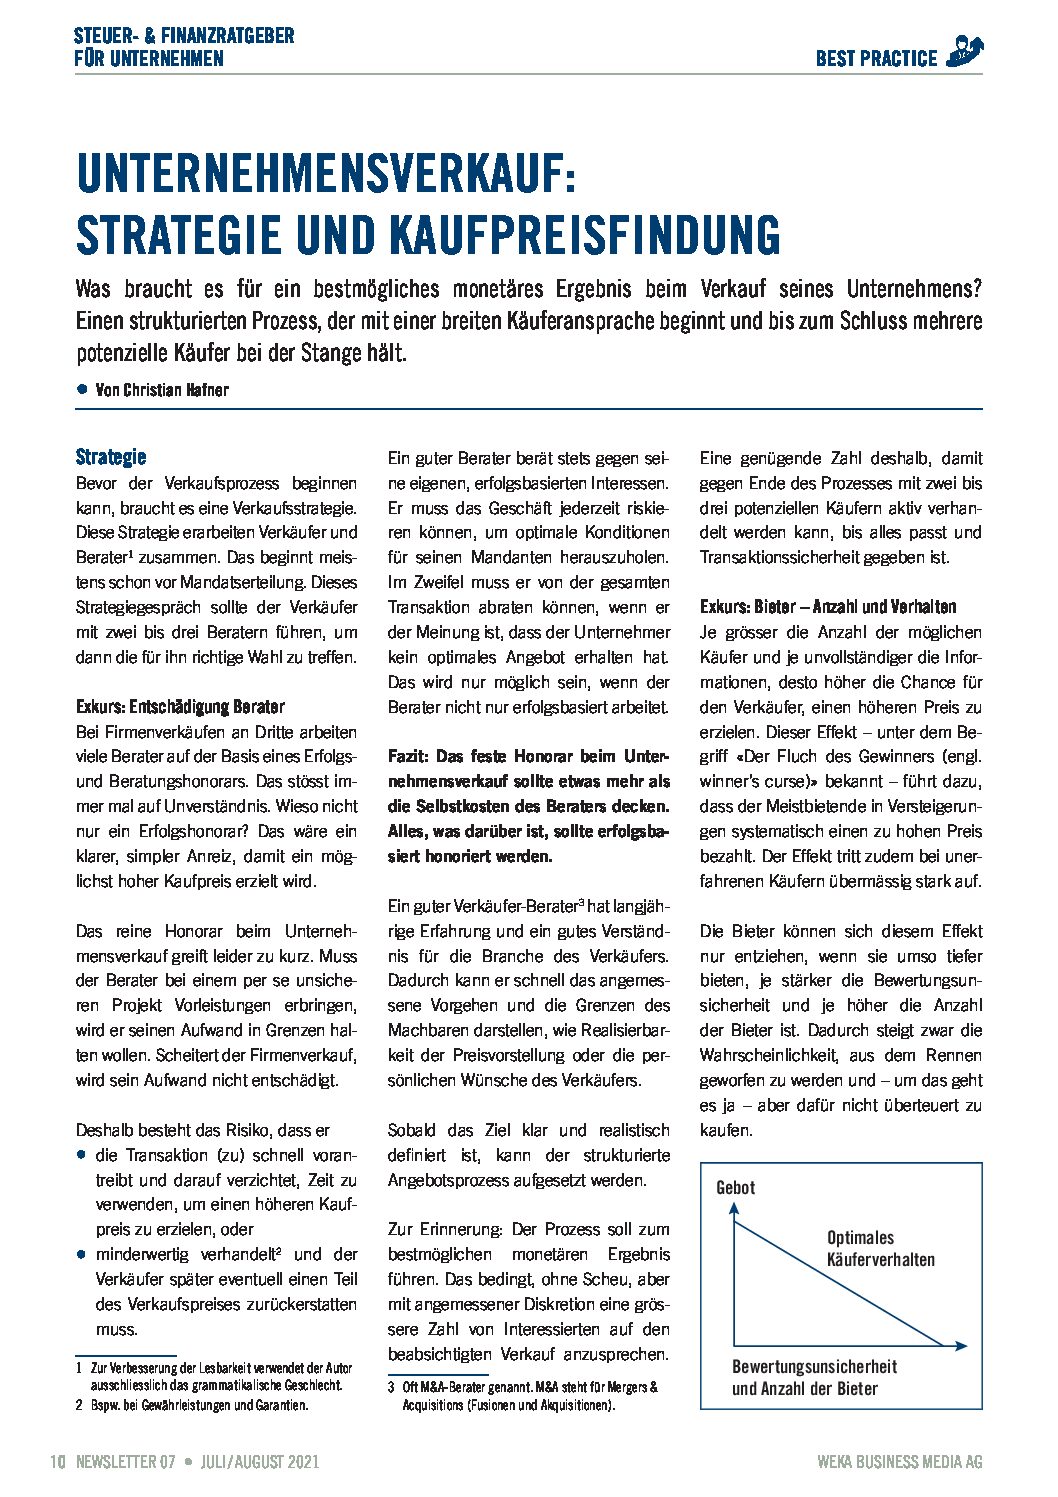 UVerkauf_Strategie_Kaufpreisfindung_JulAug-2021.pdf